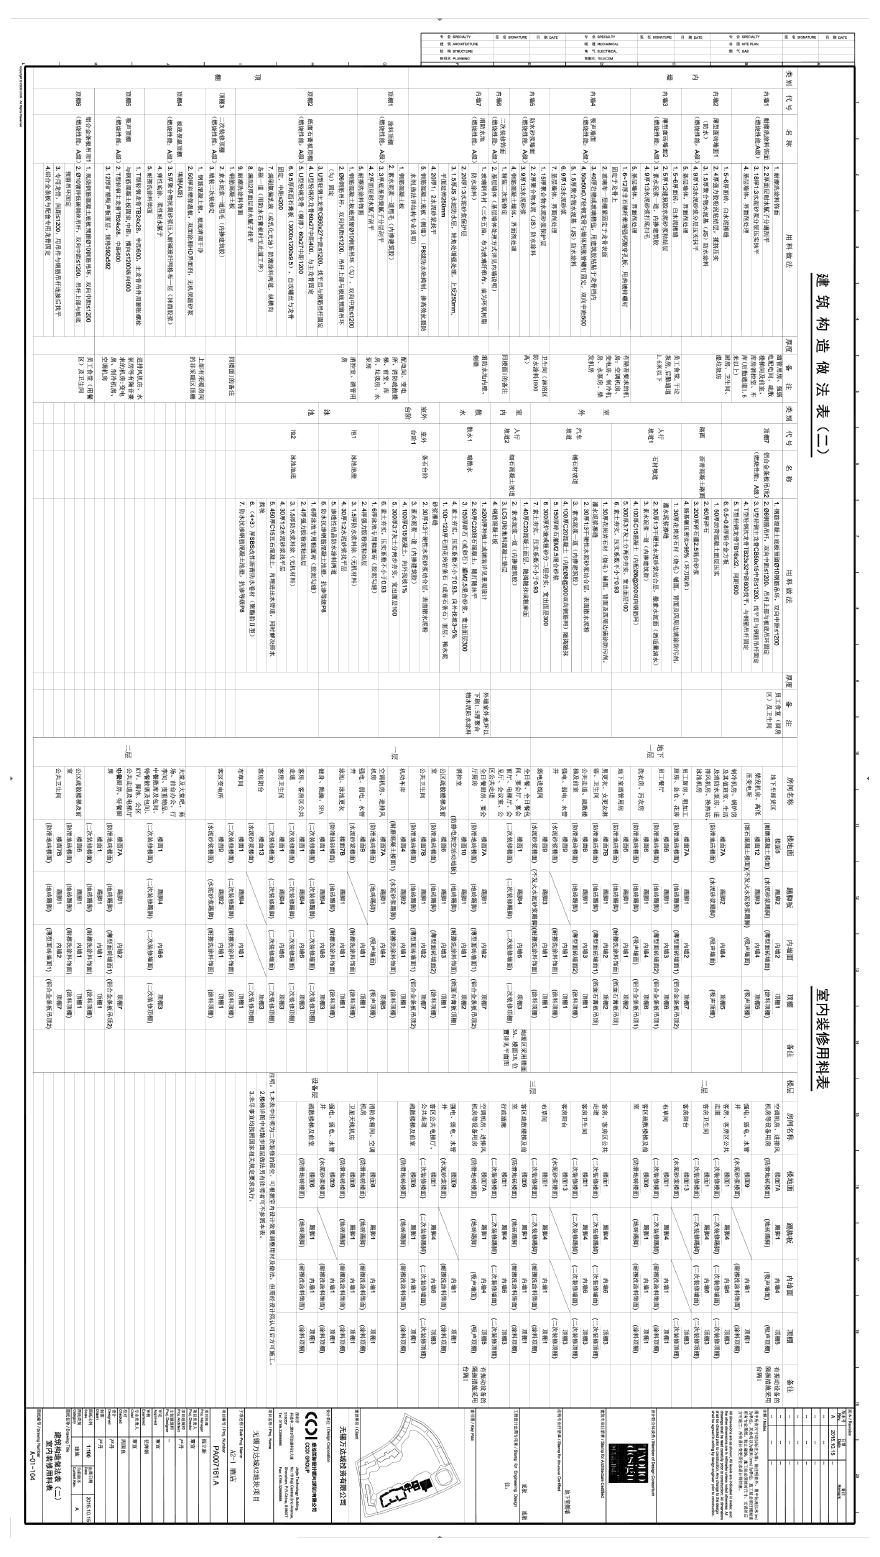  Construction Method Table (II), Interior Decoration Materials Table. pdf - Figure I